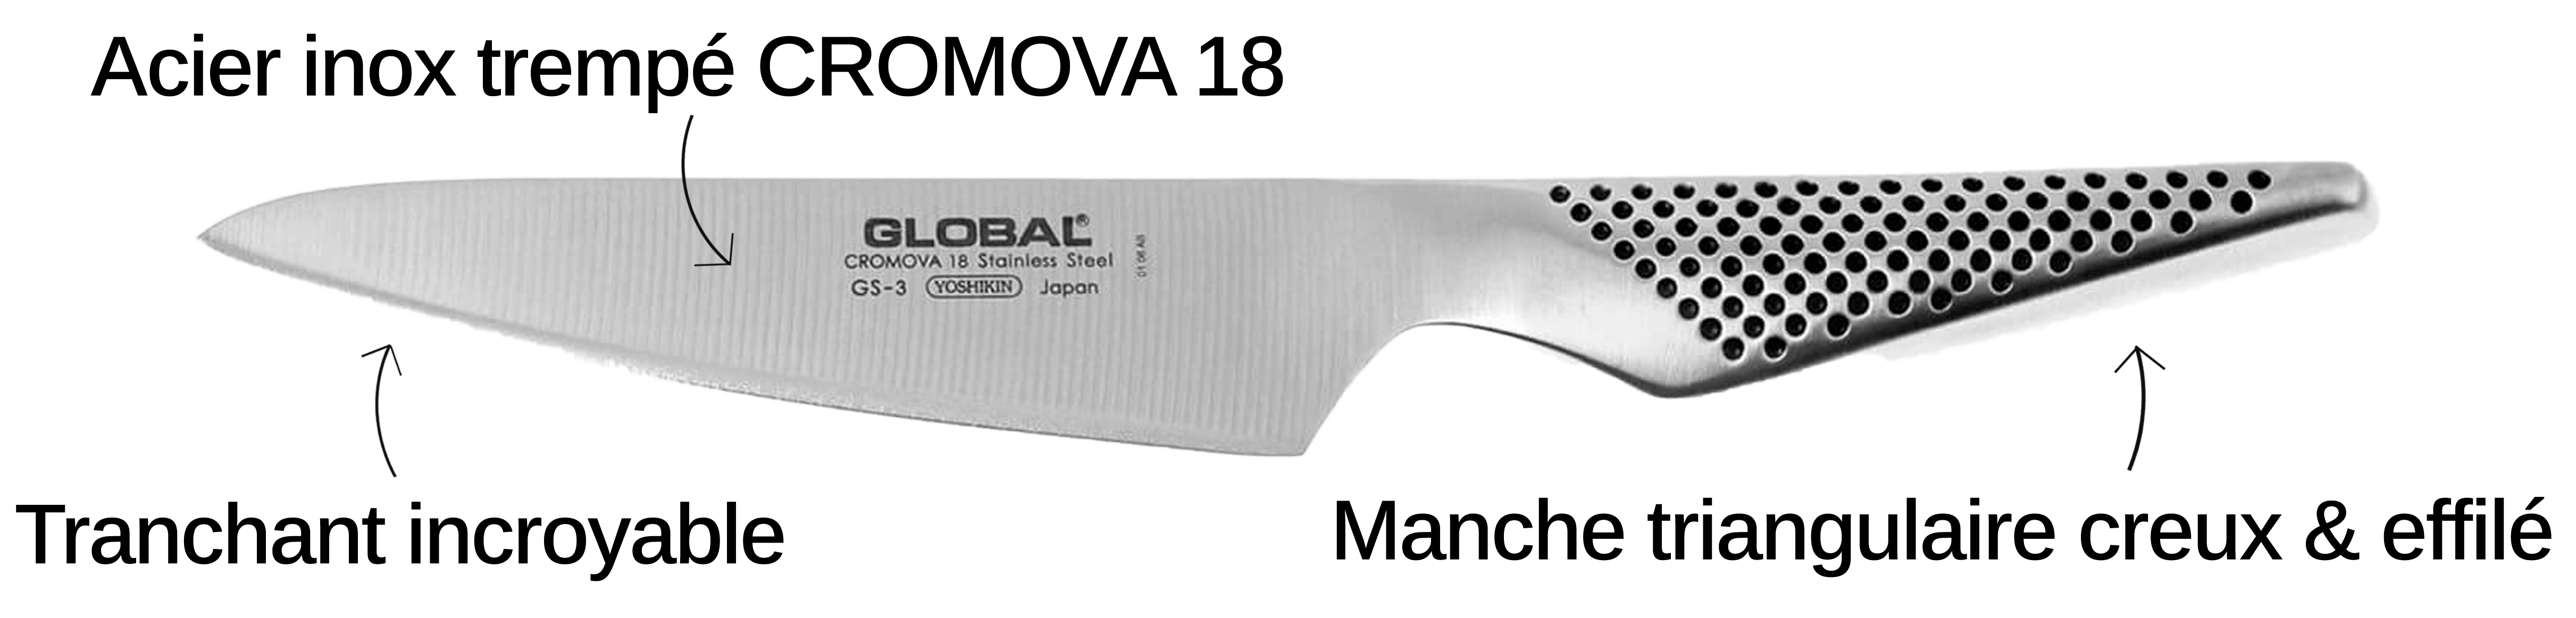 Couteau éplucheur 10 cm Global (GS6) - GLOBAL